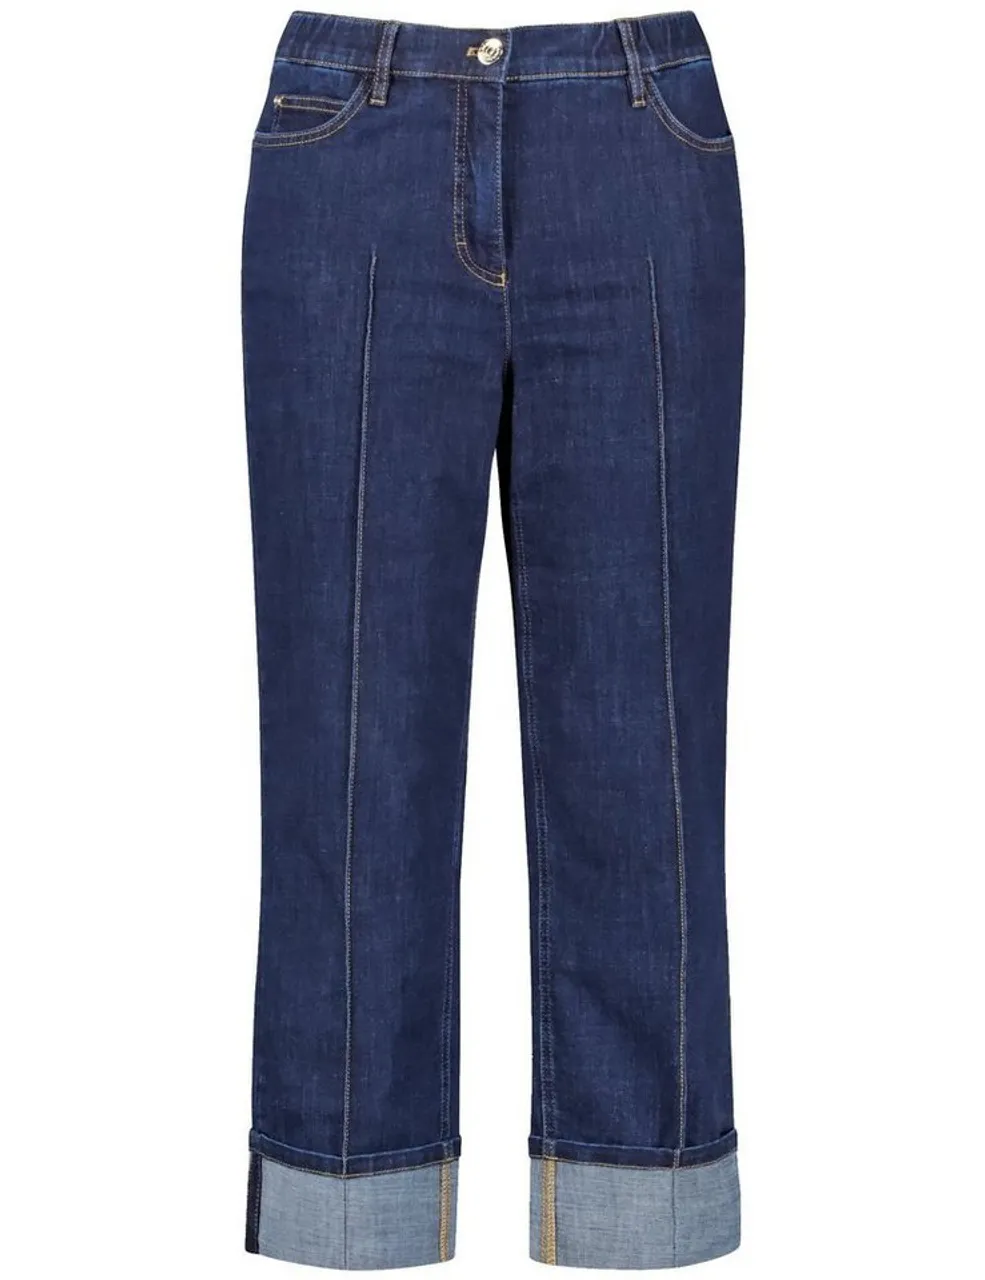 Samoon Stoffhose 7/8 Jeans mit Kontraststepp Betty Jeans